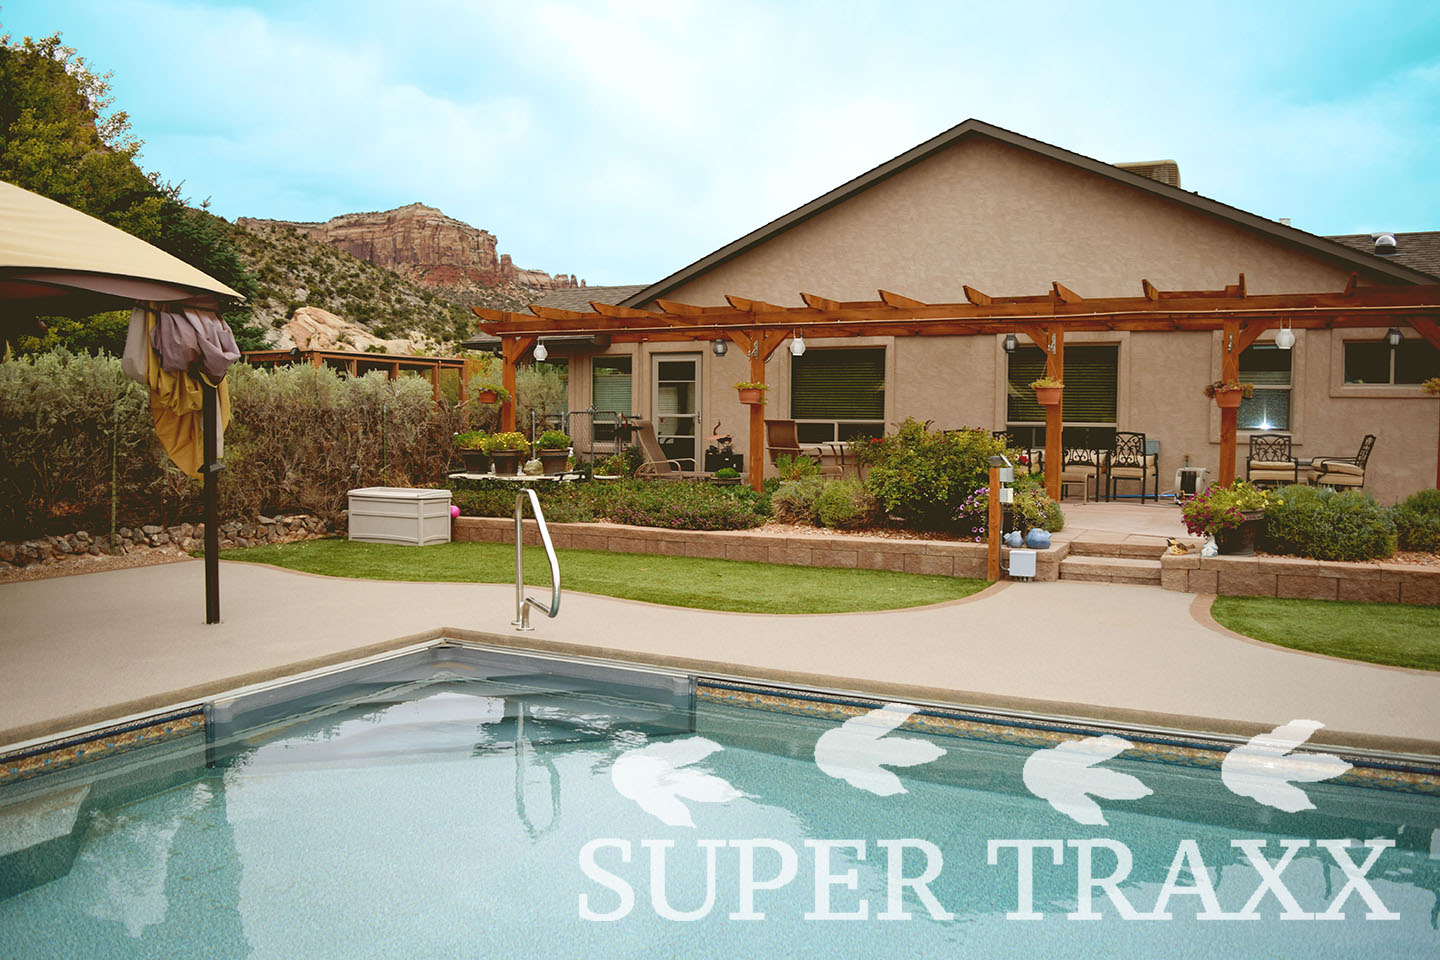 supertraxx outdoor flexx quartz sand coating on patio surrounding pool